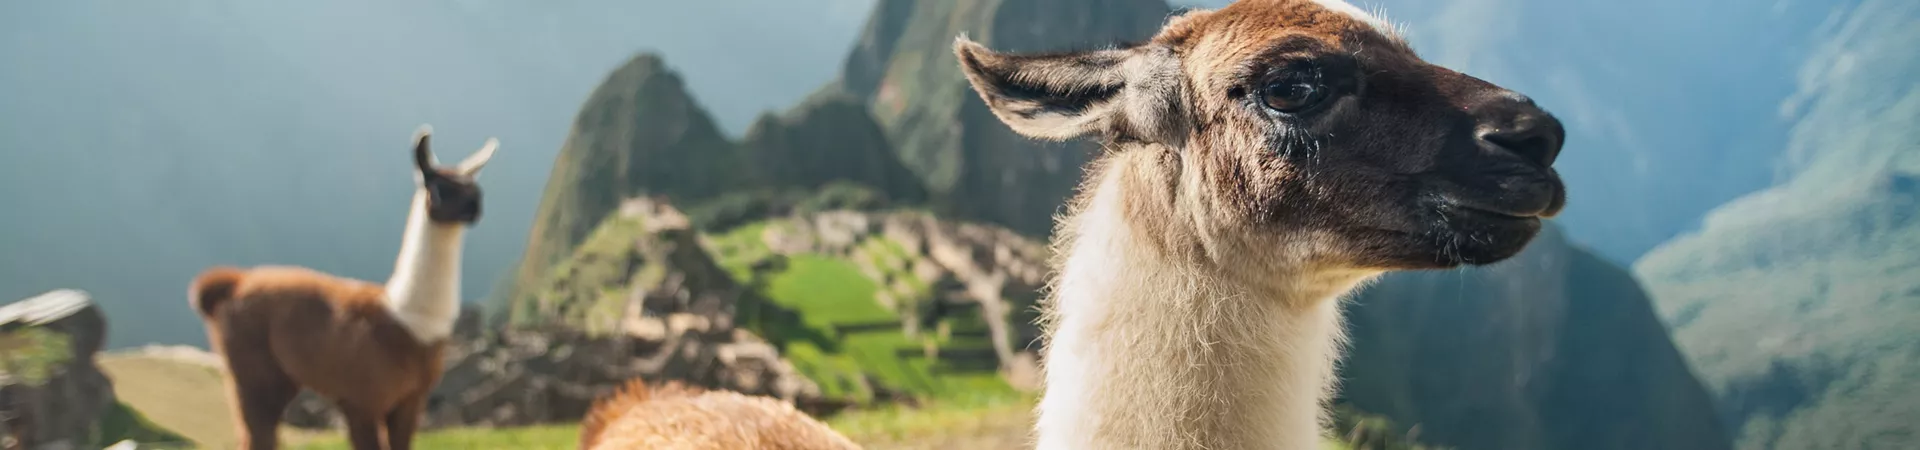 Llama in the Peruvian mountains